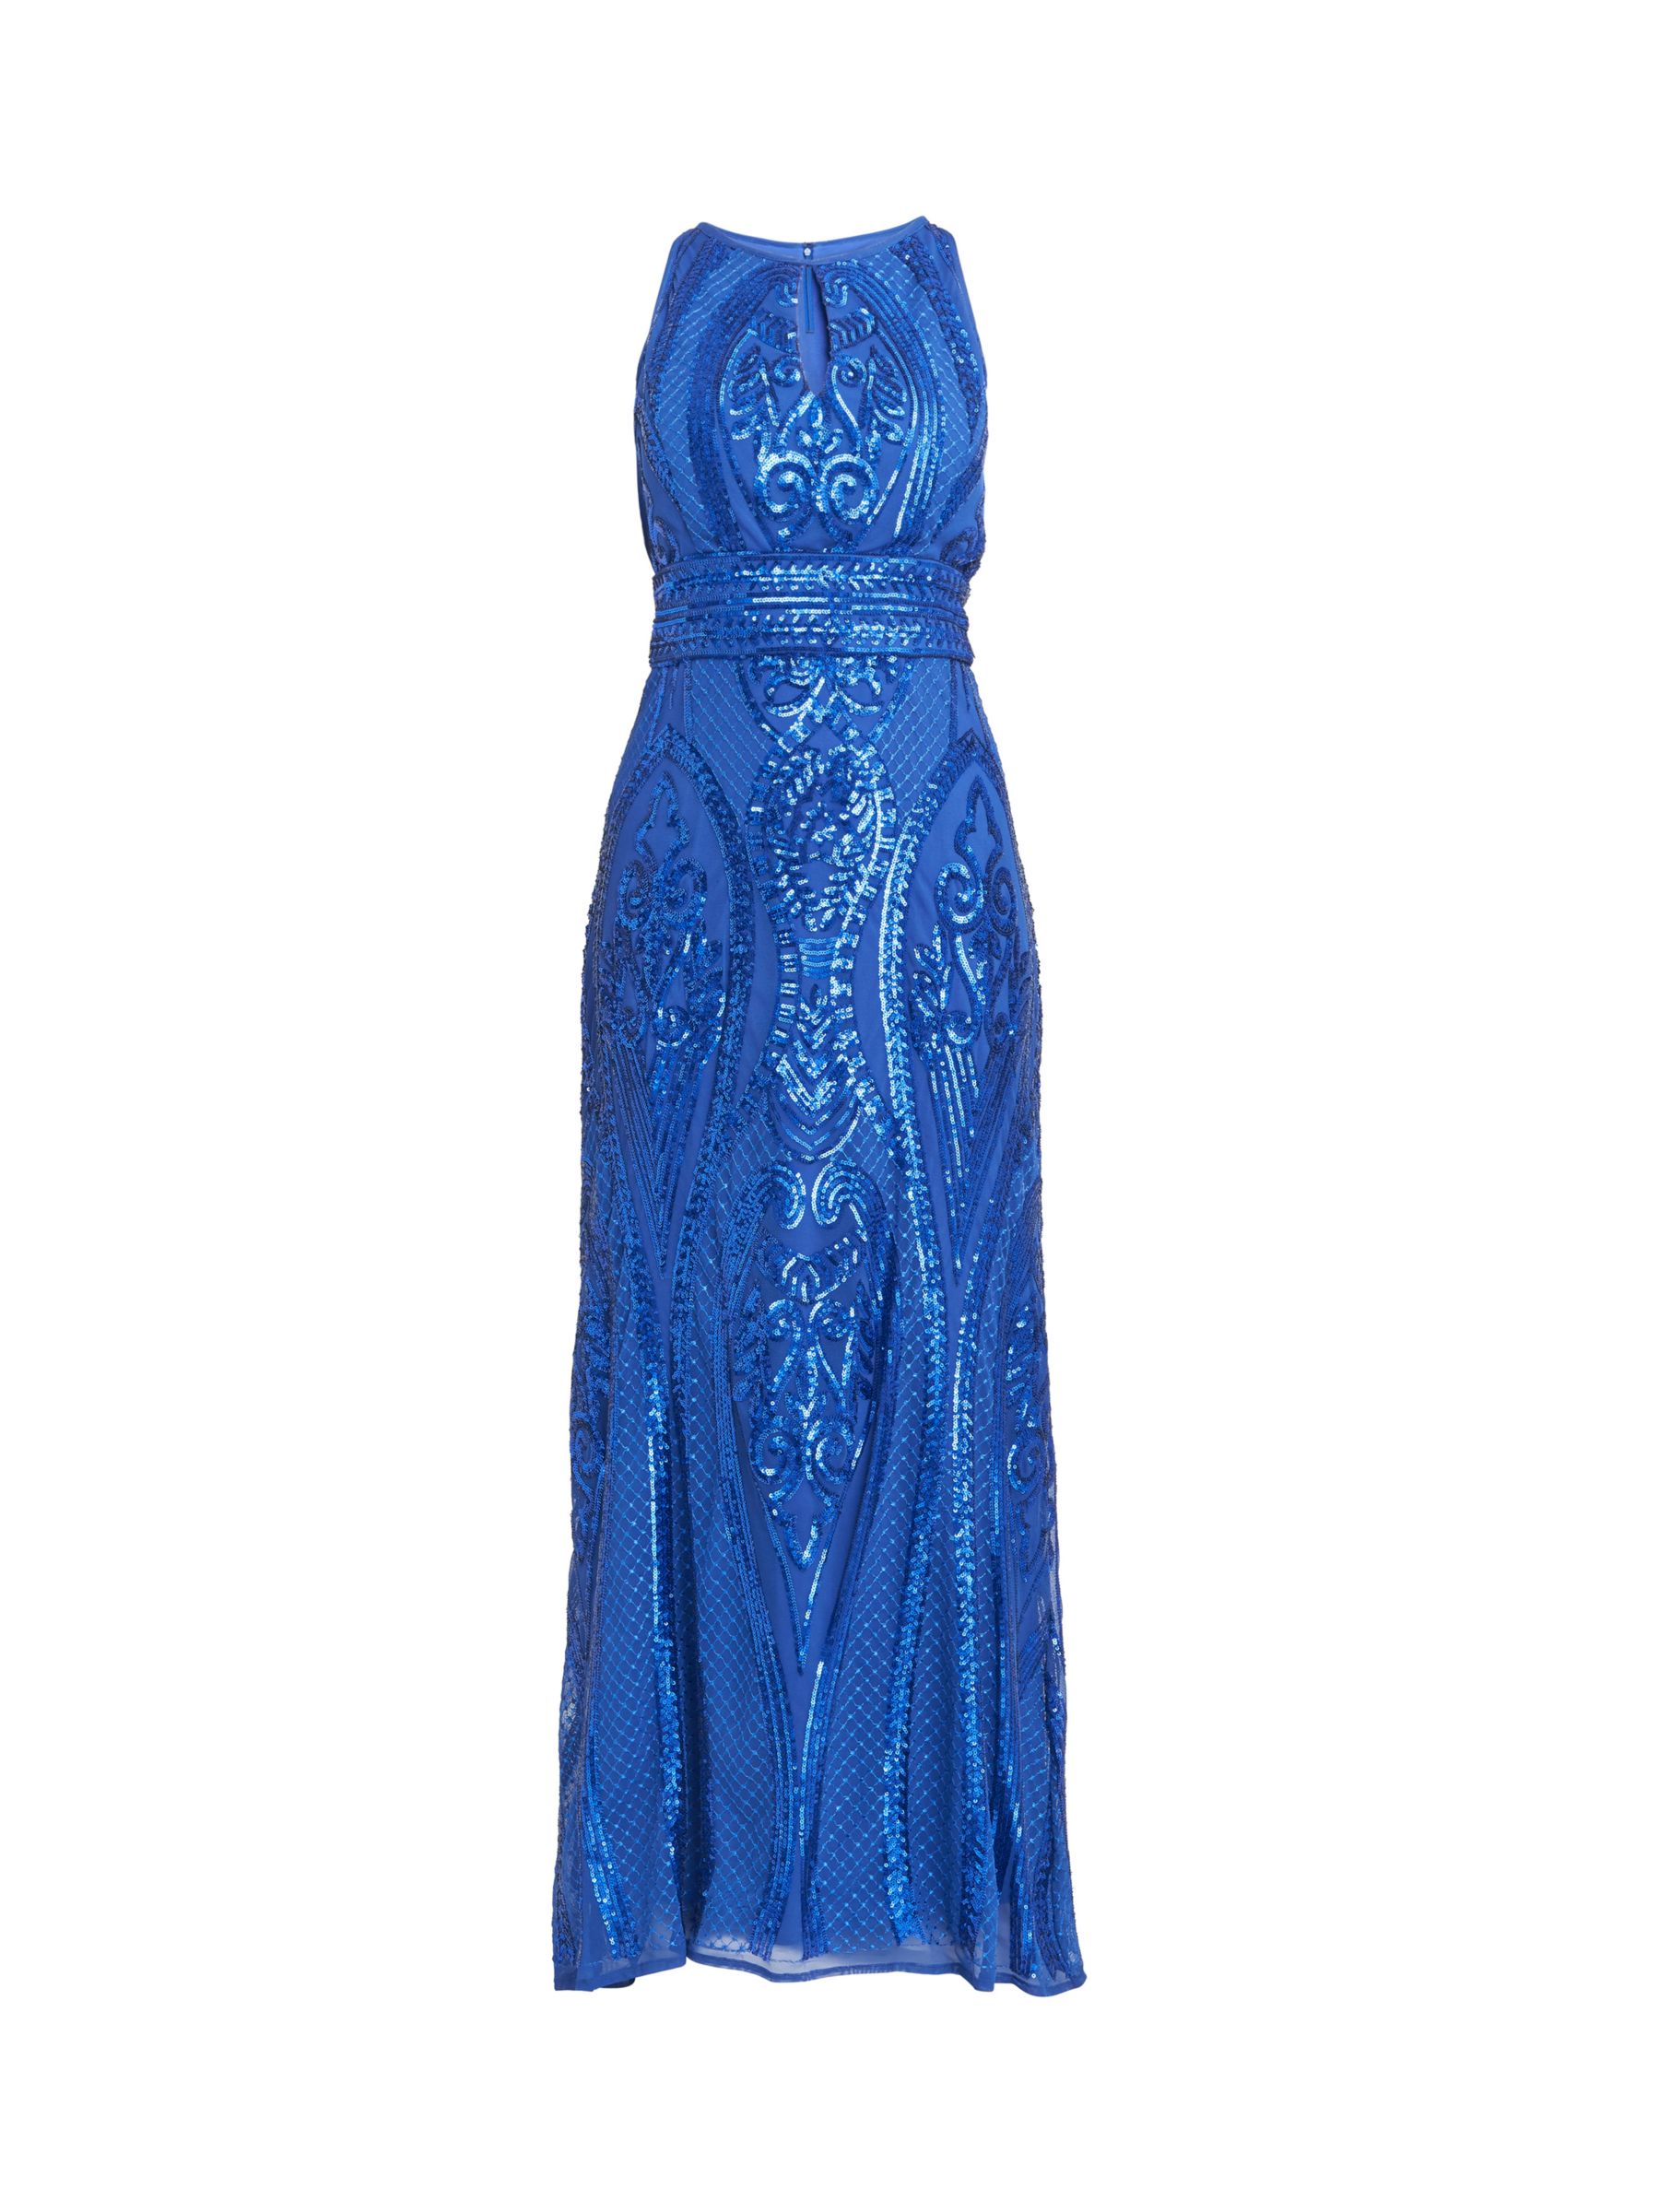 Gina Bacconi Natalie Sequin Bead Maxi Dress, Royal Blue, 14